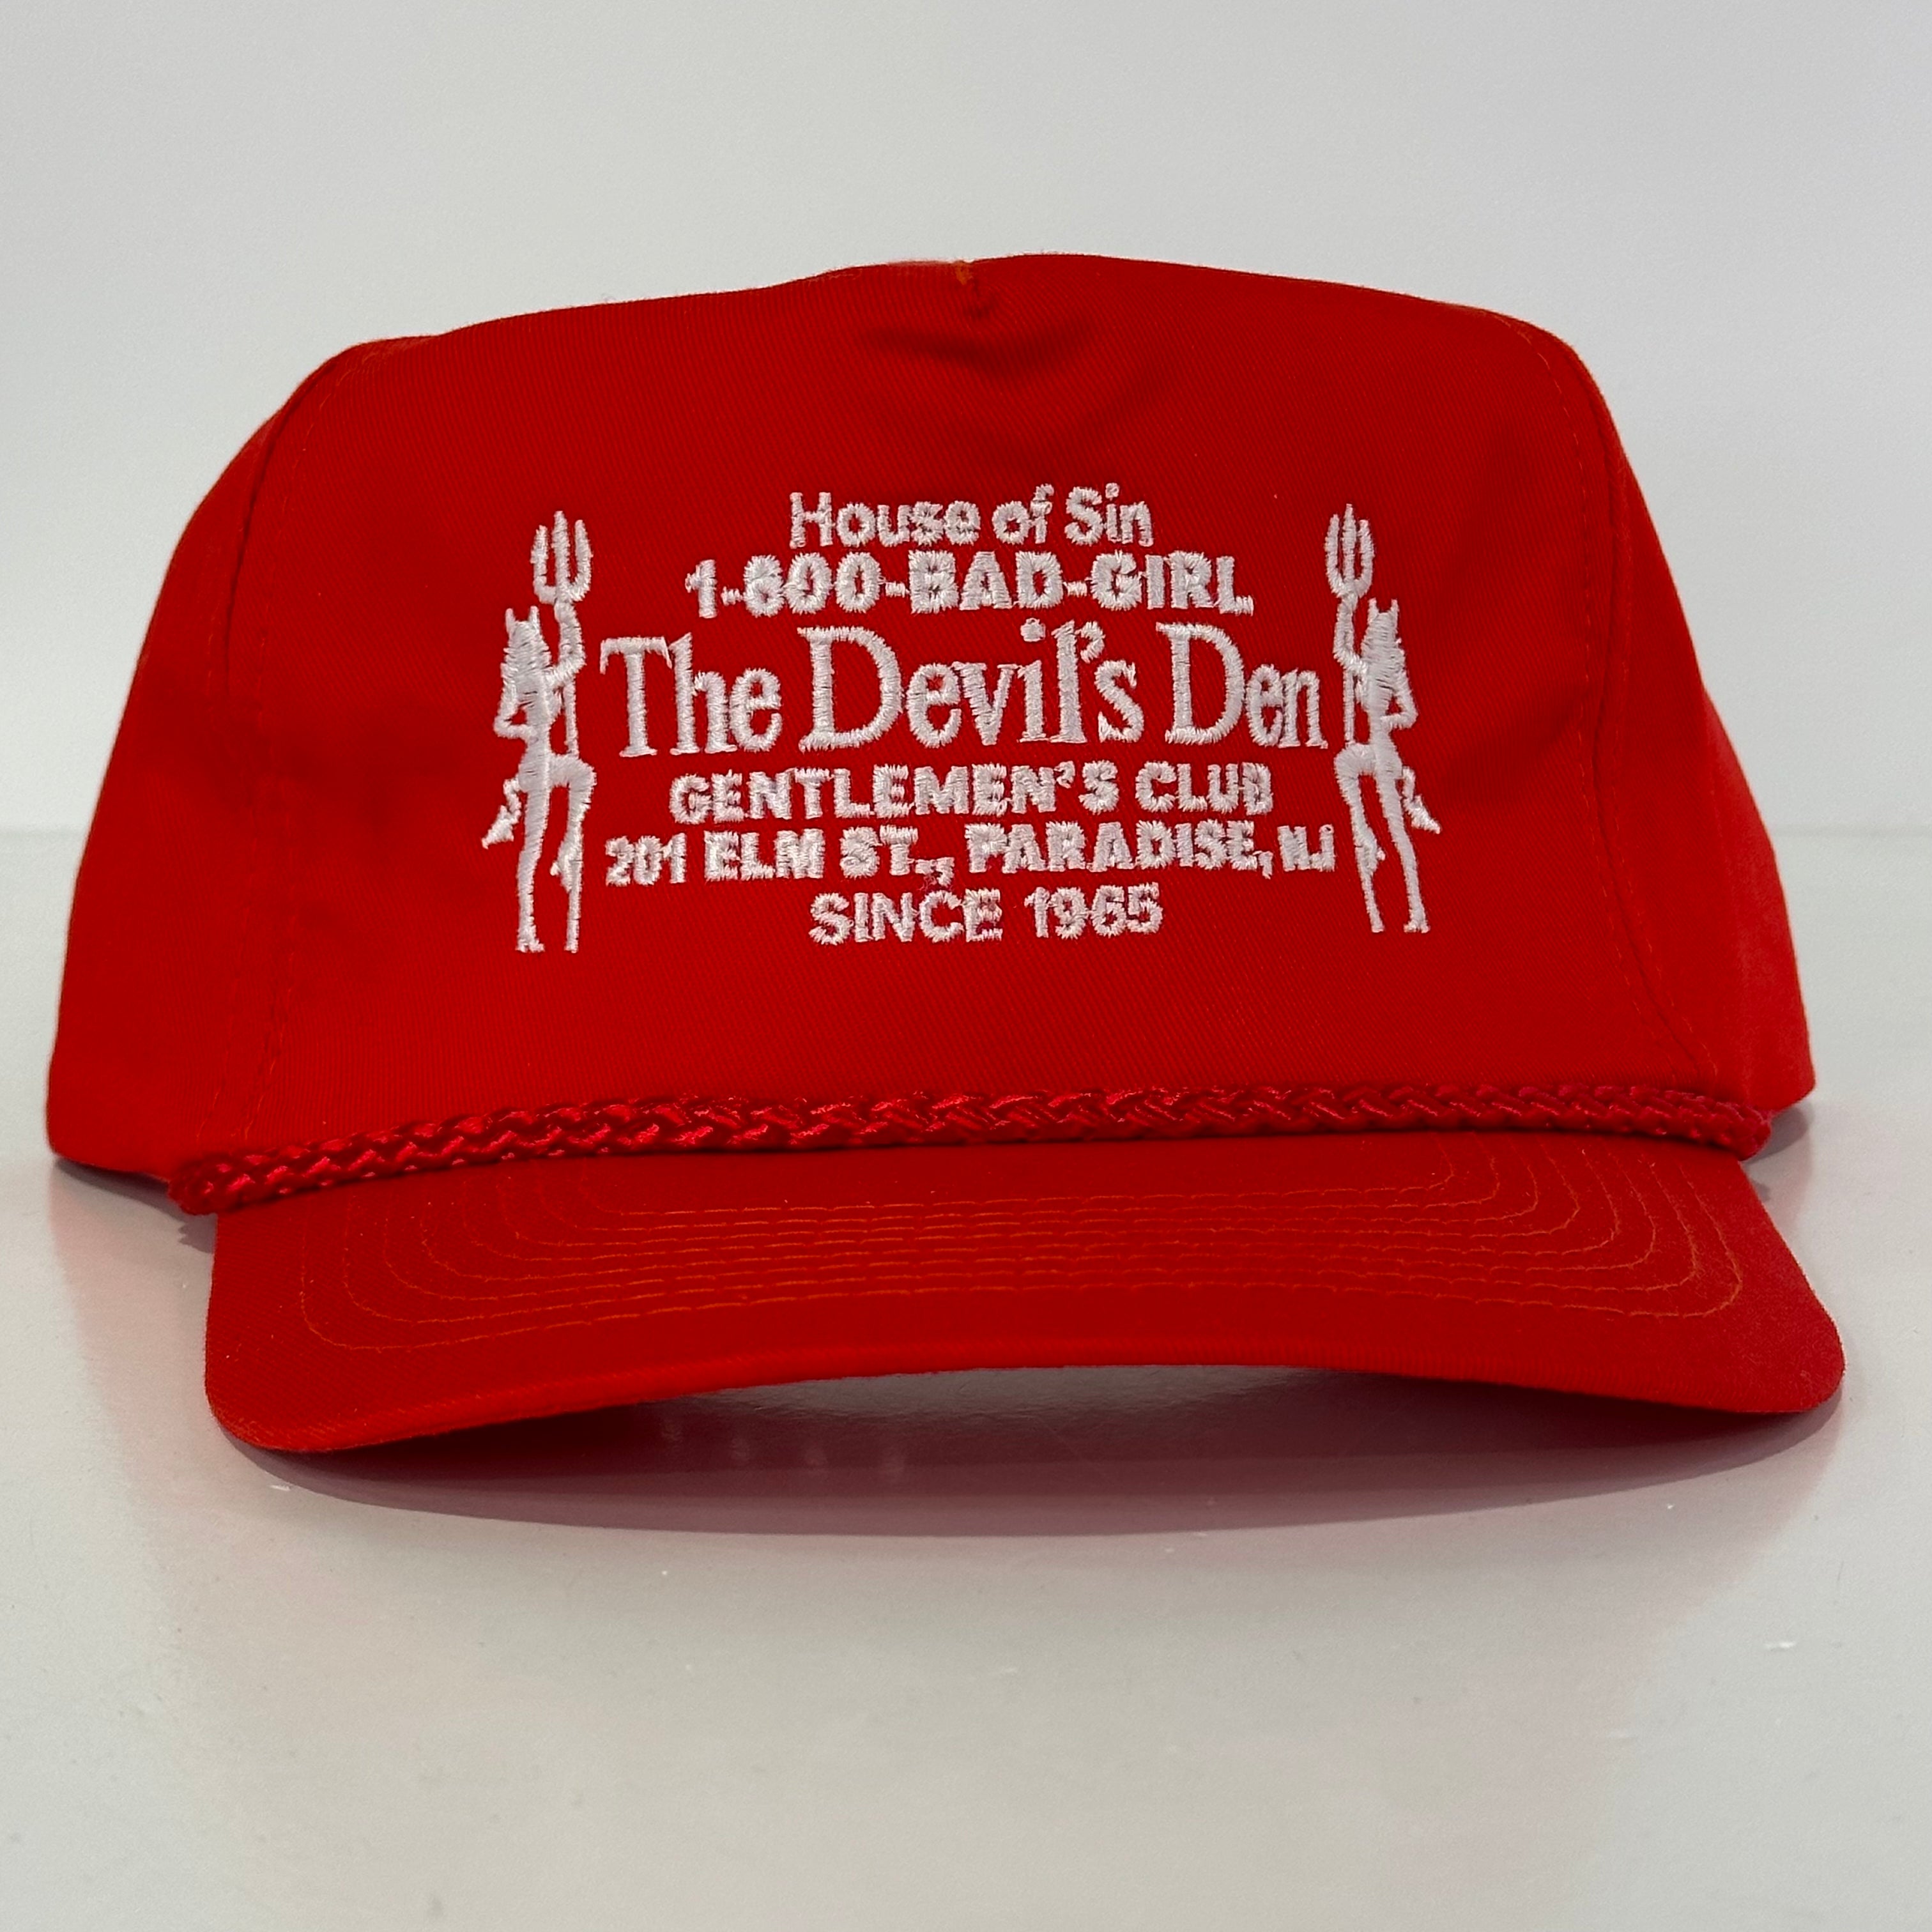 The Devils Den Gentlemen's Club on a black mesh trucker SnapBack